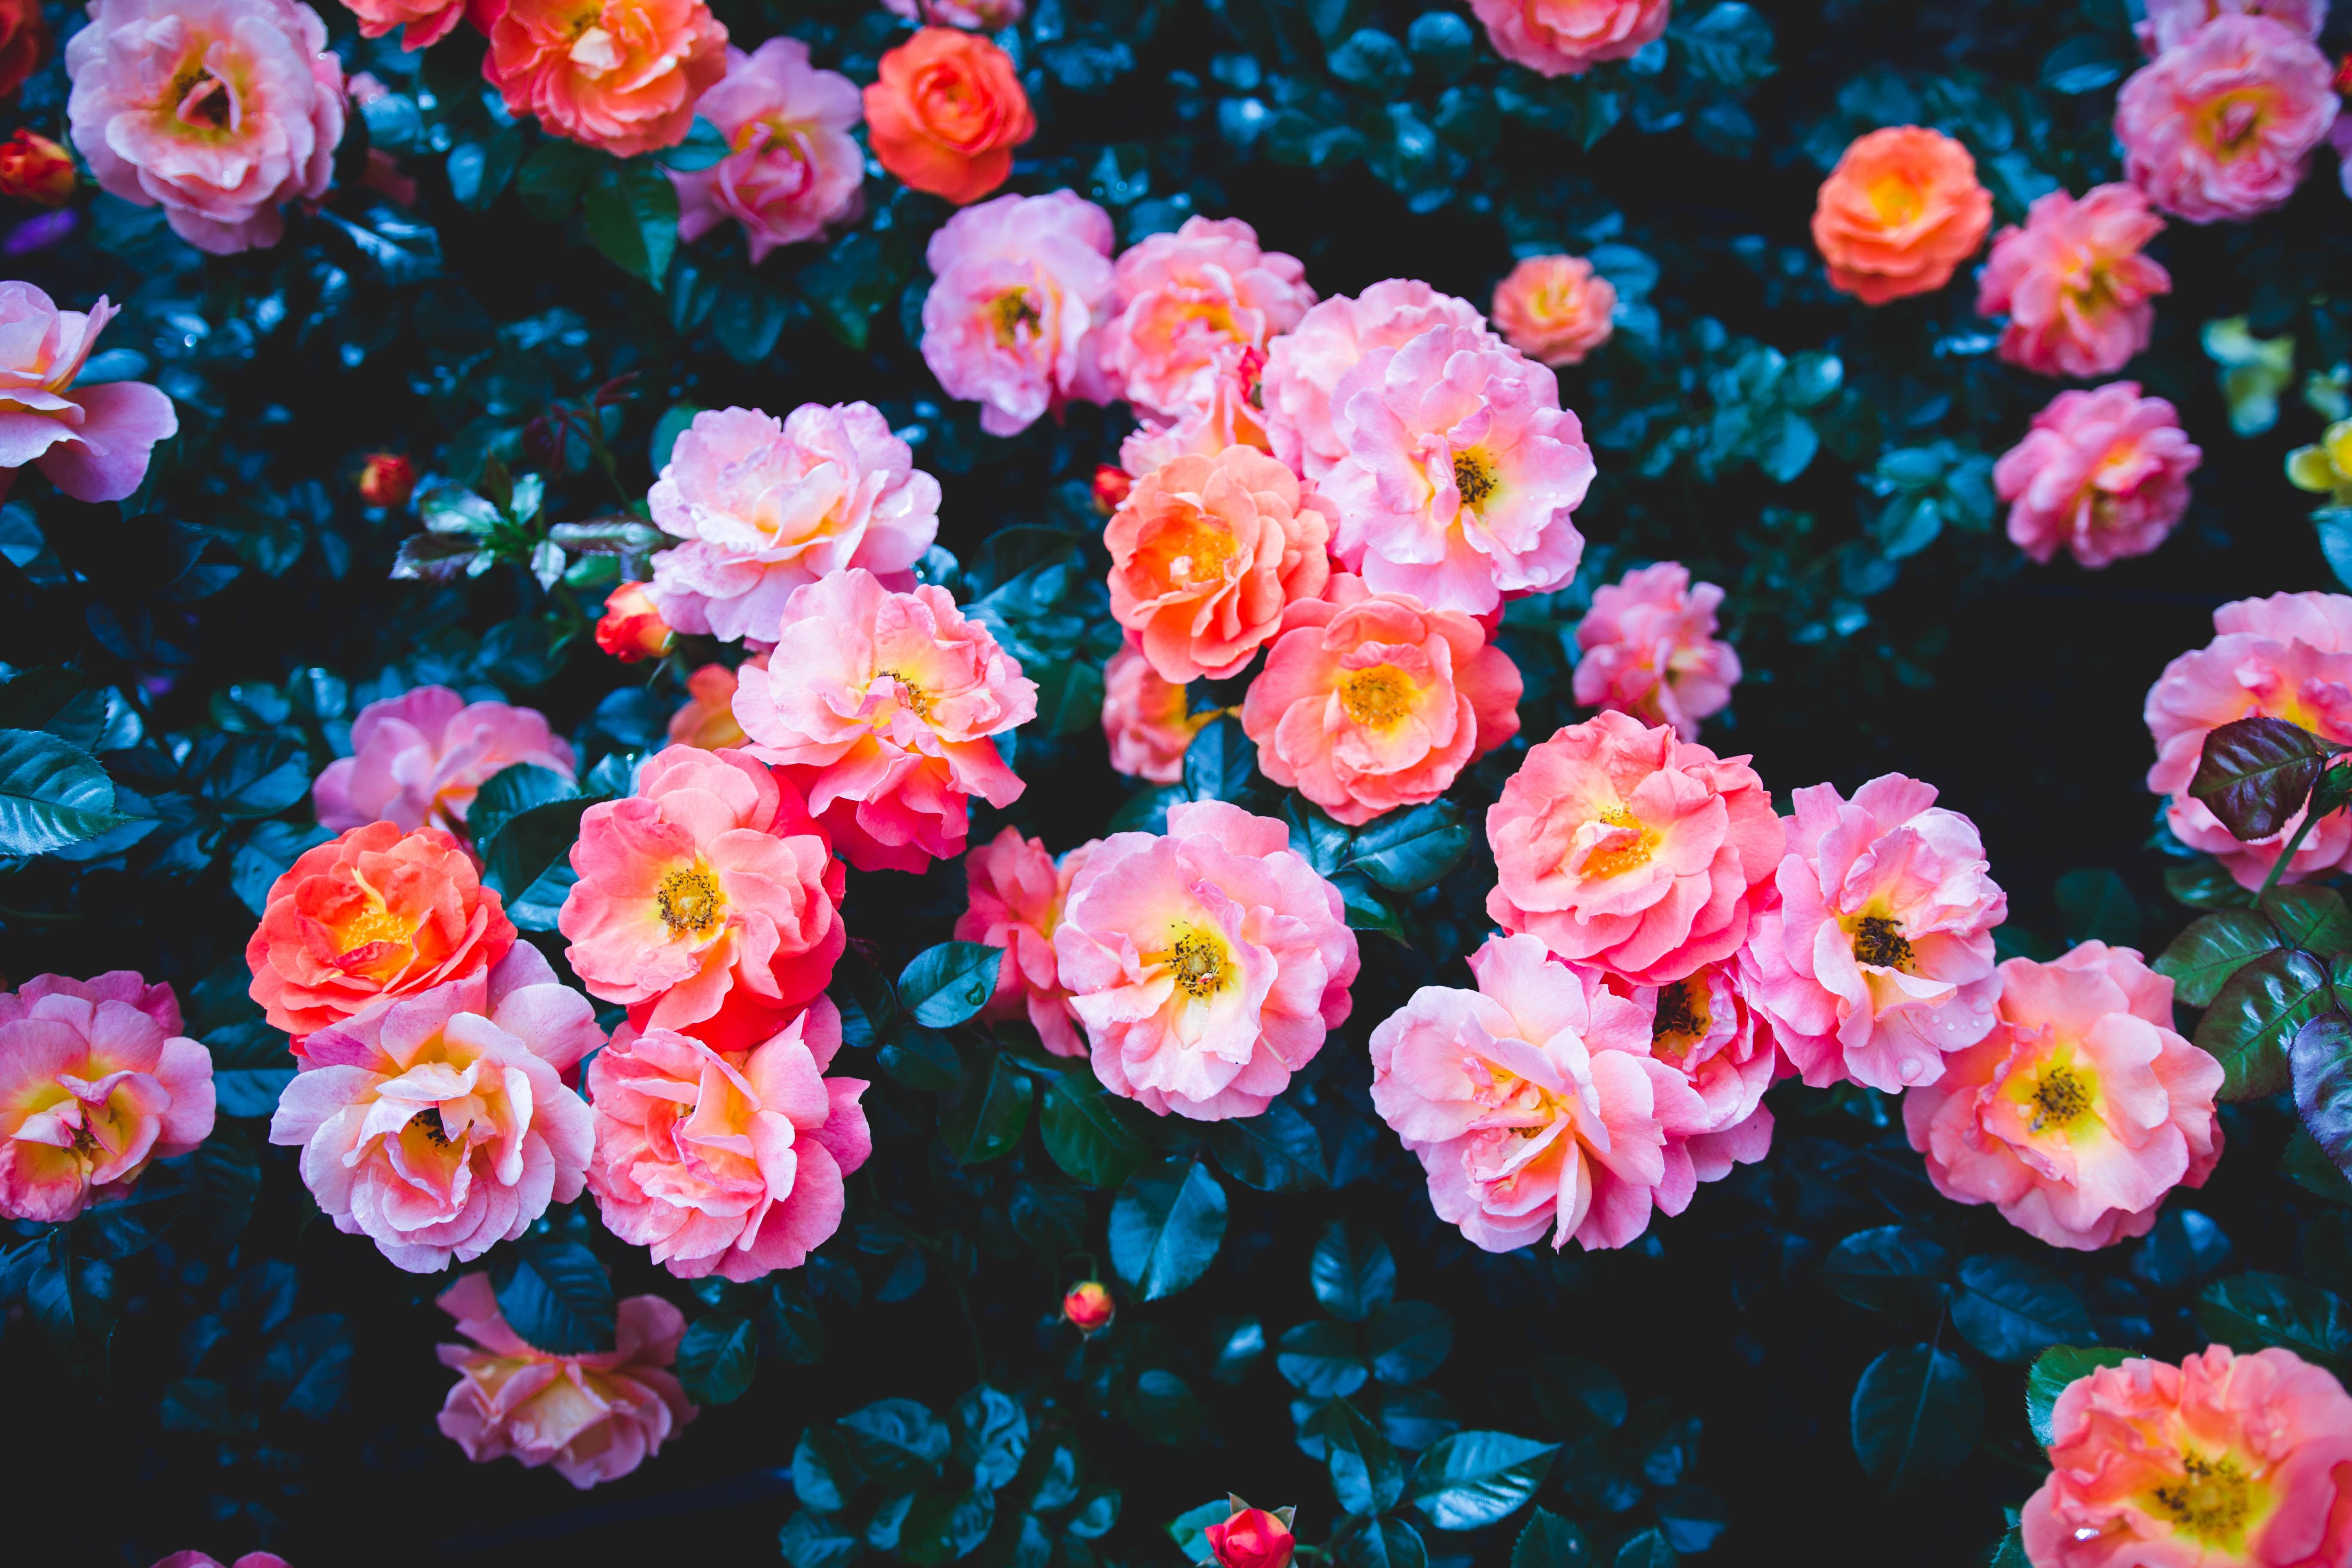 Image: Flowers, shrub, rose, pink, leaves